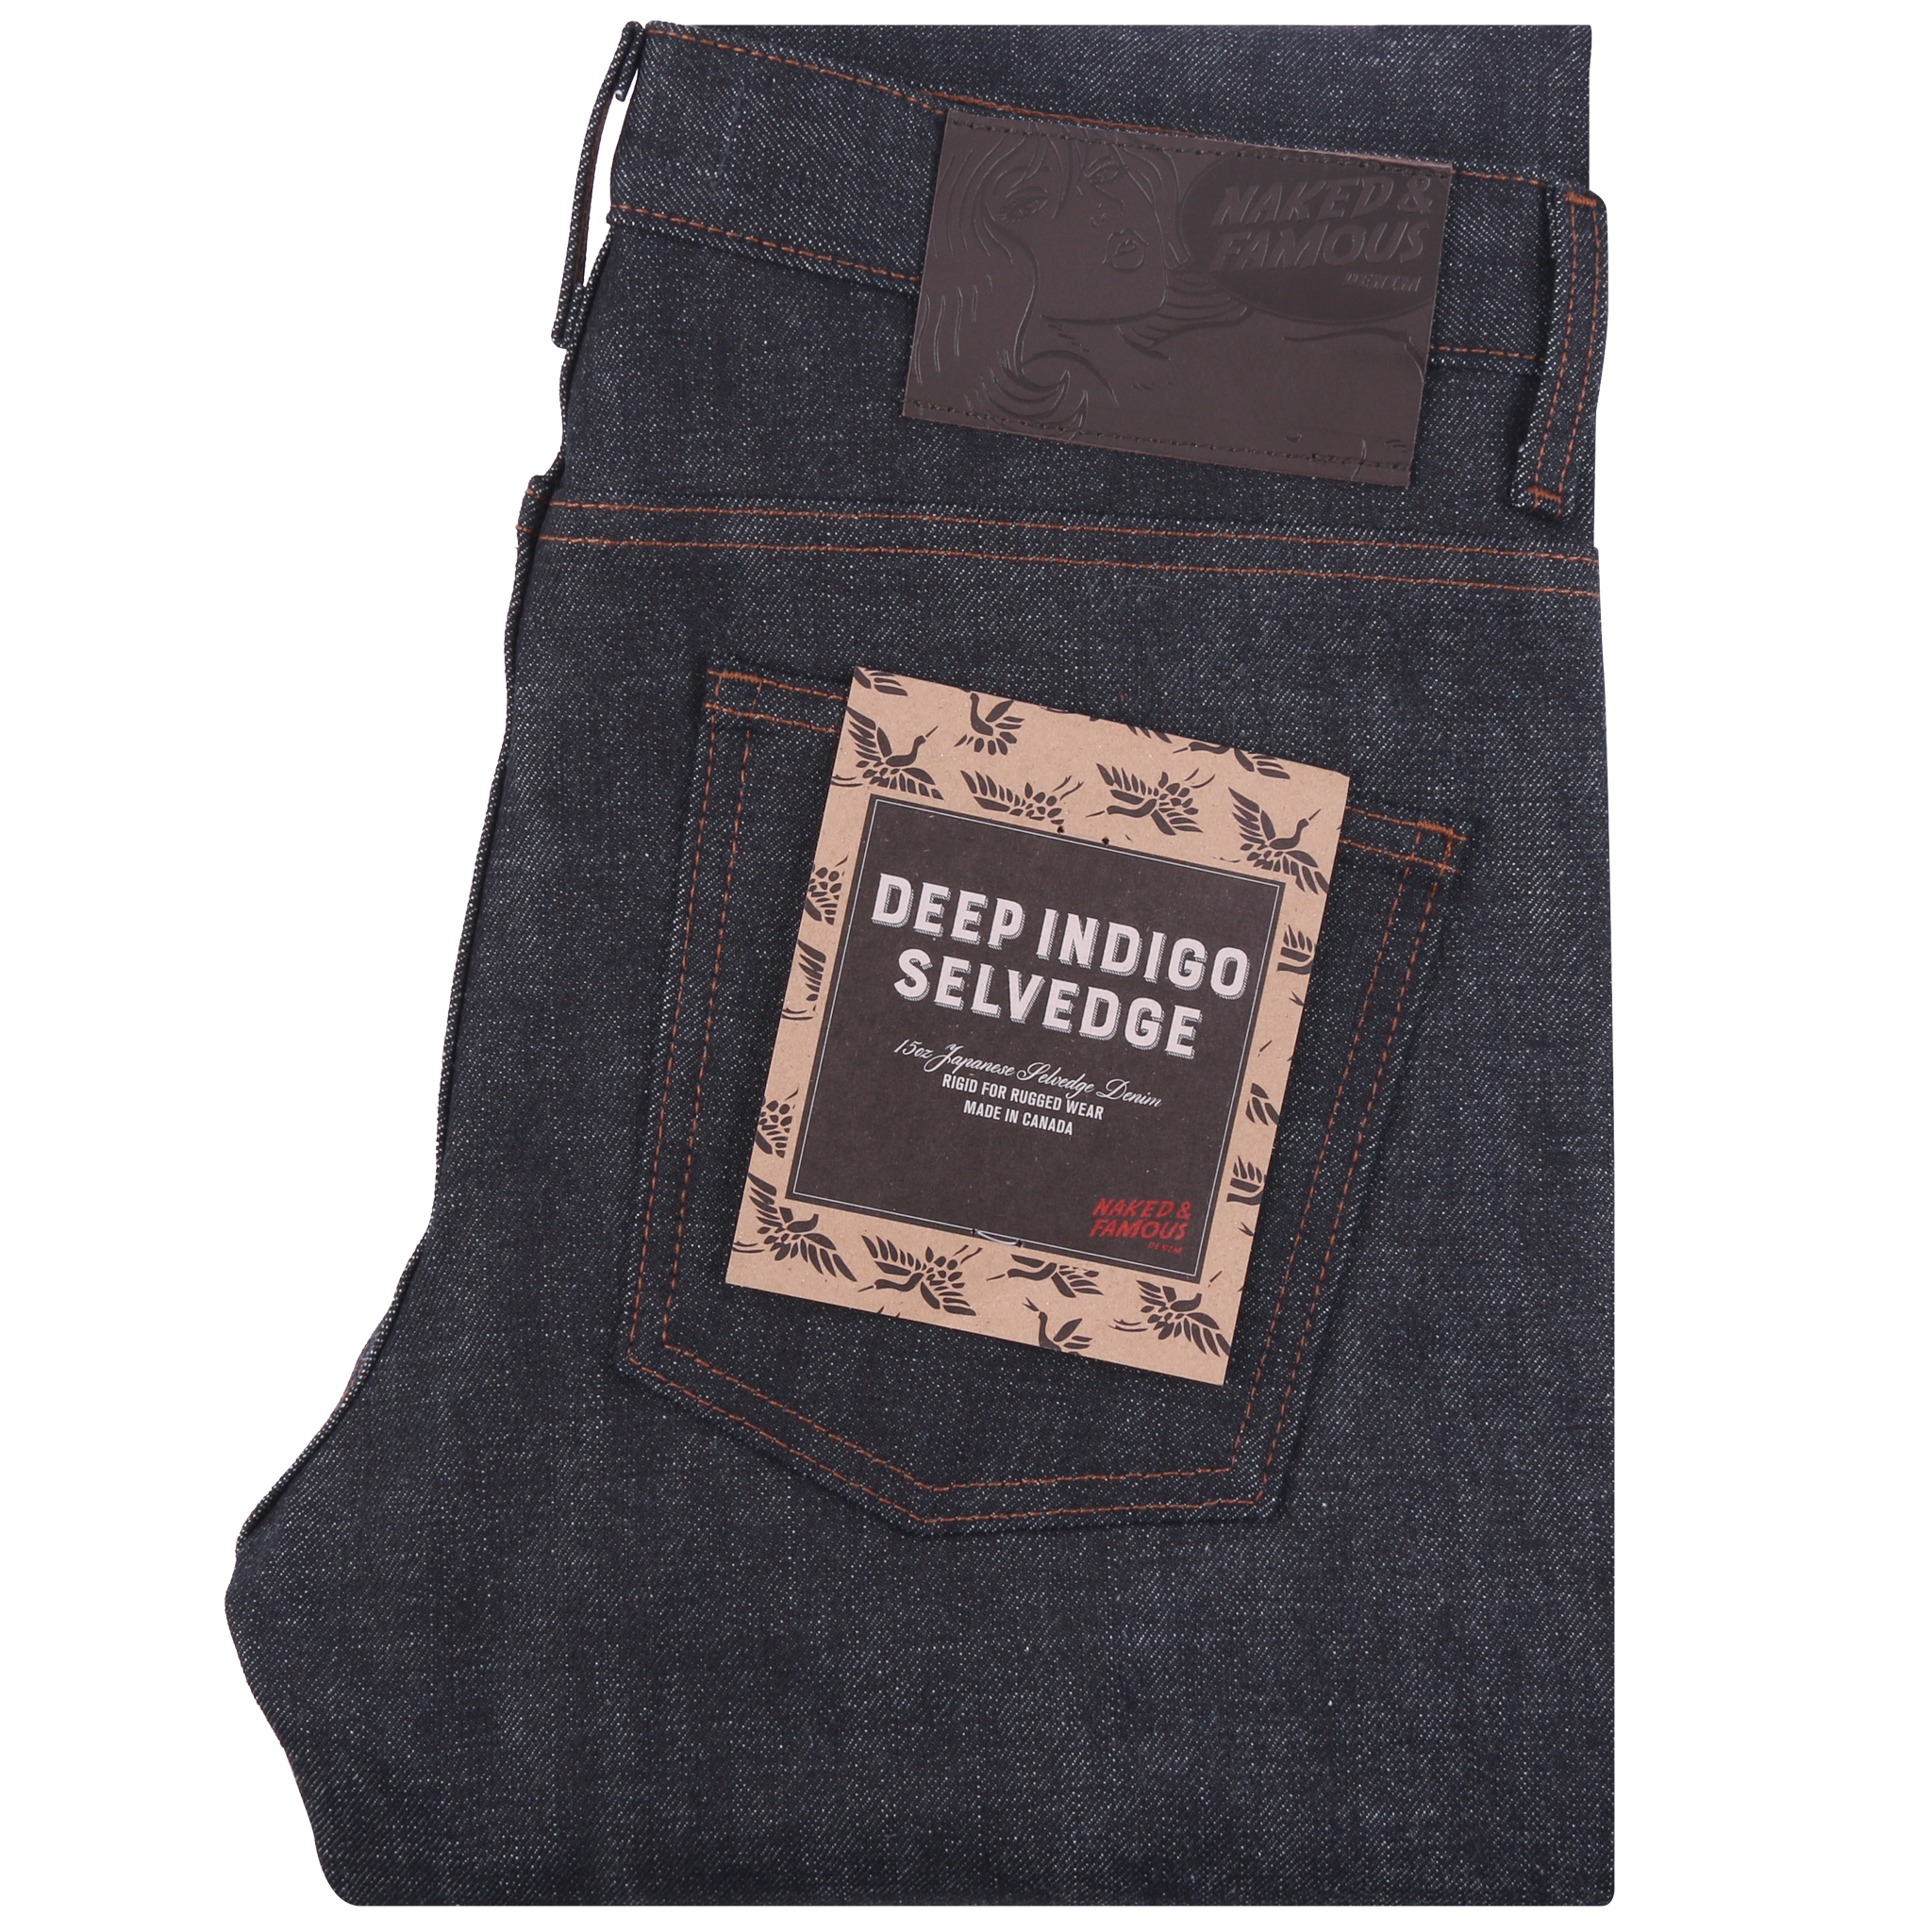  Deep Indigo Rigid Selvedge Jeans Folded 